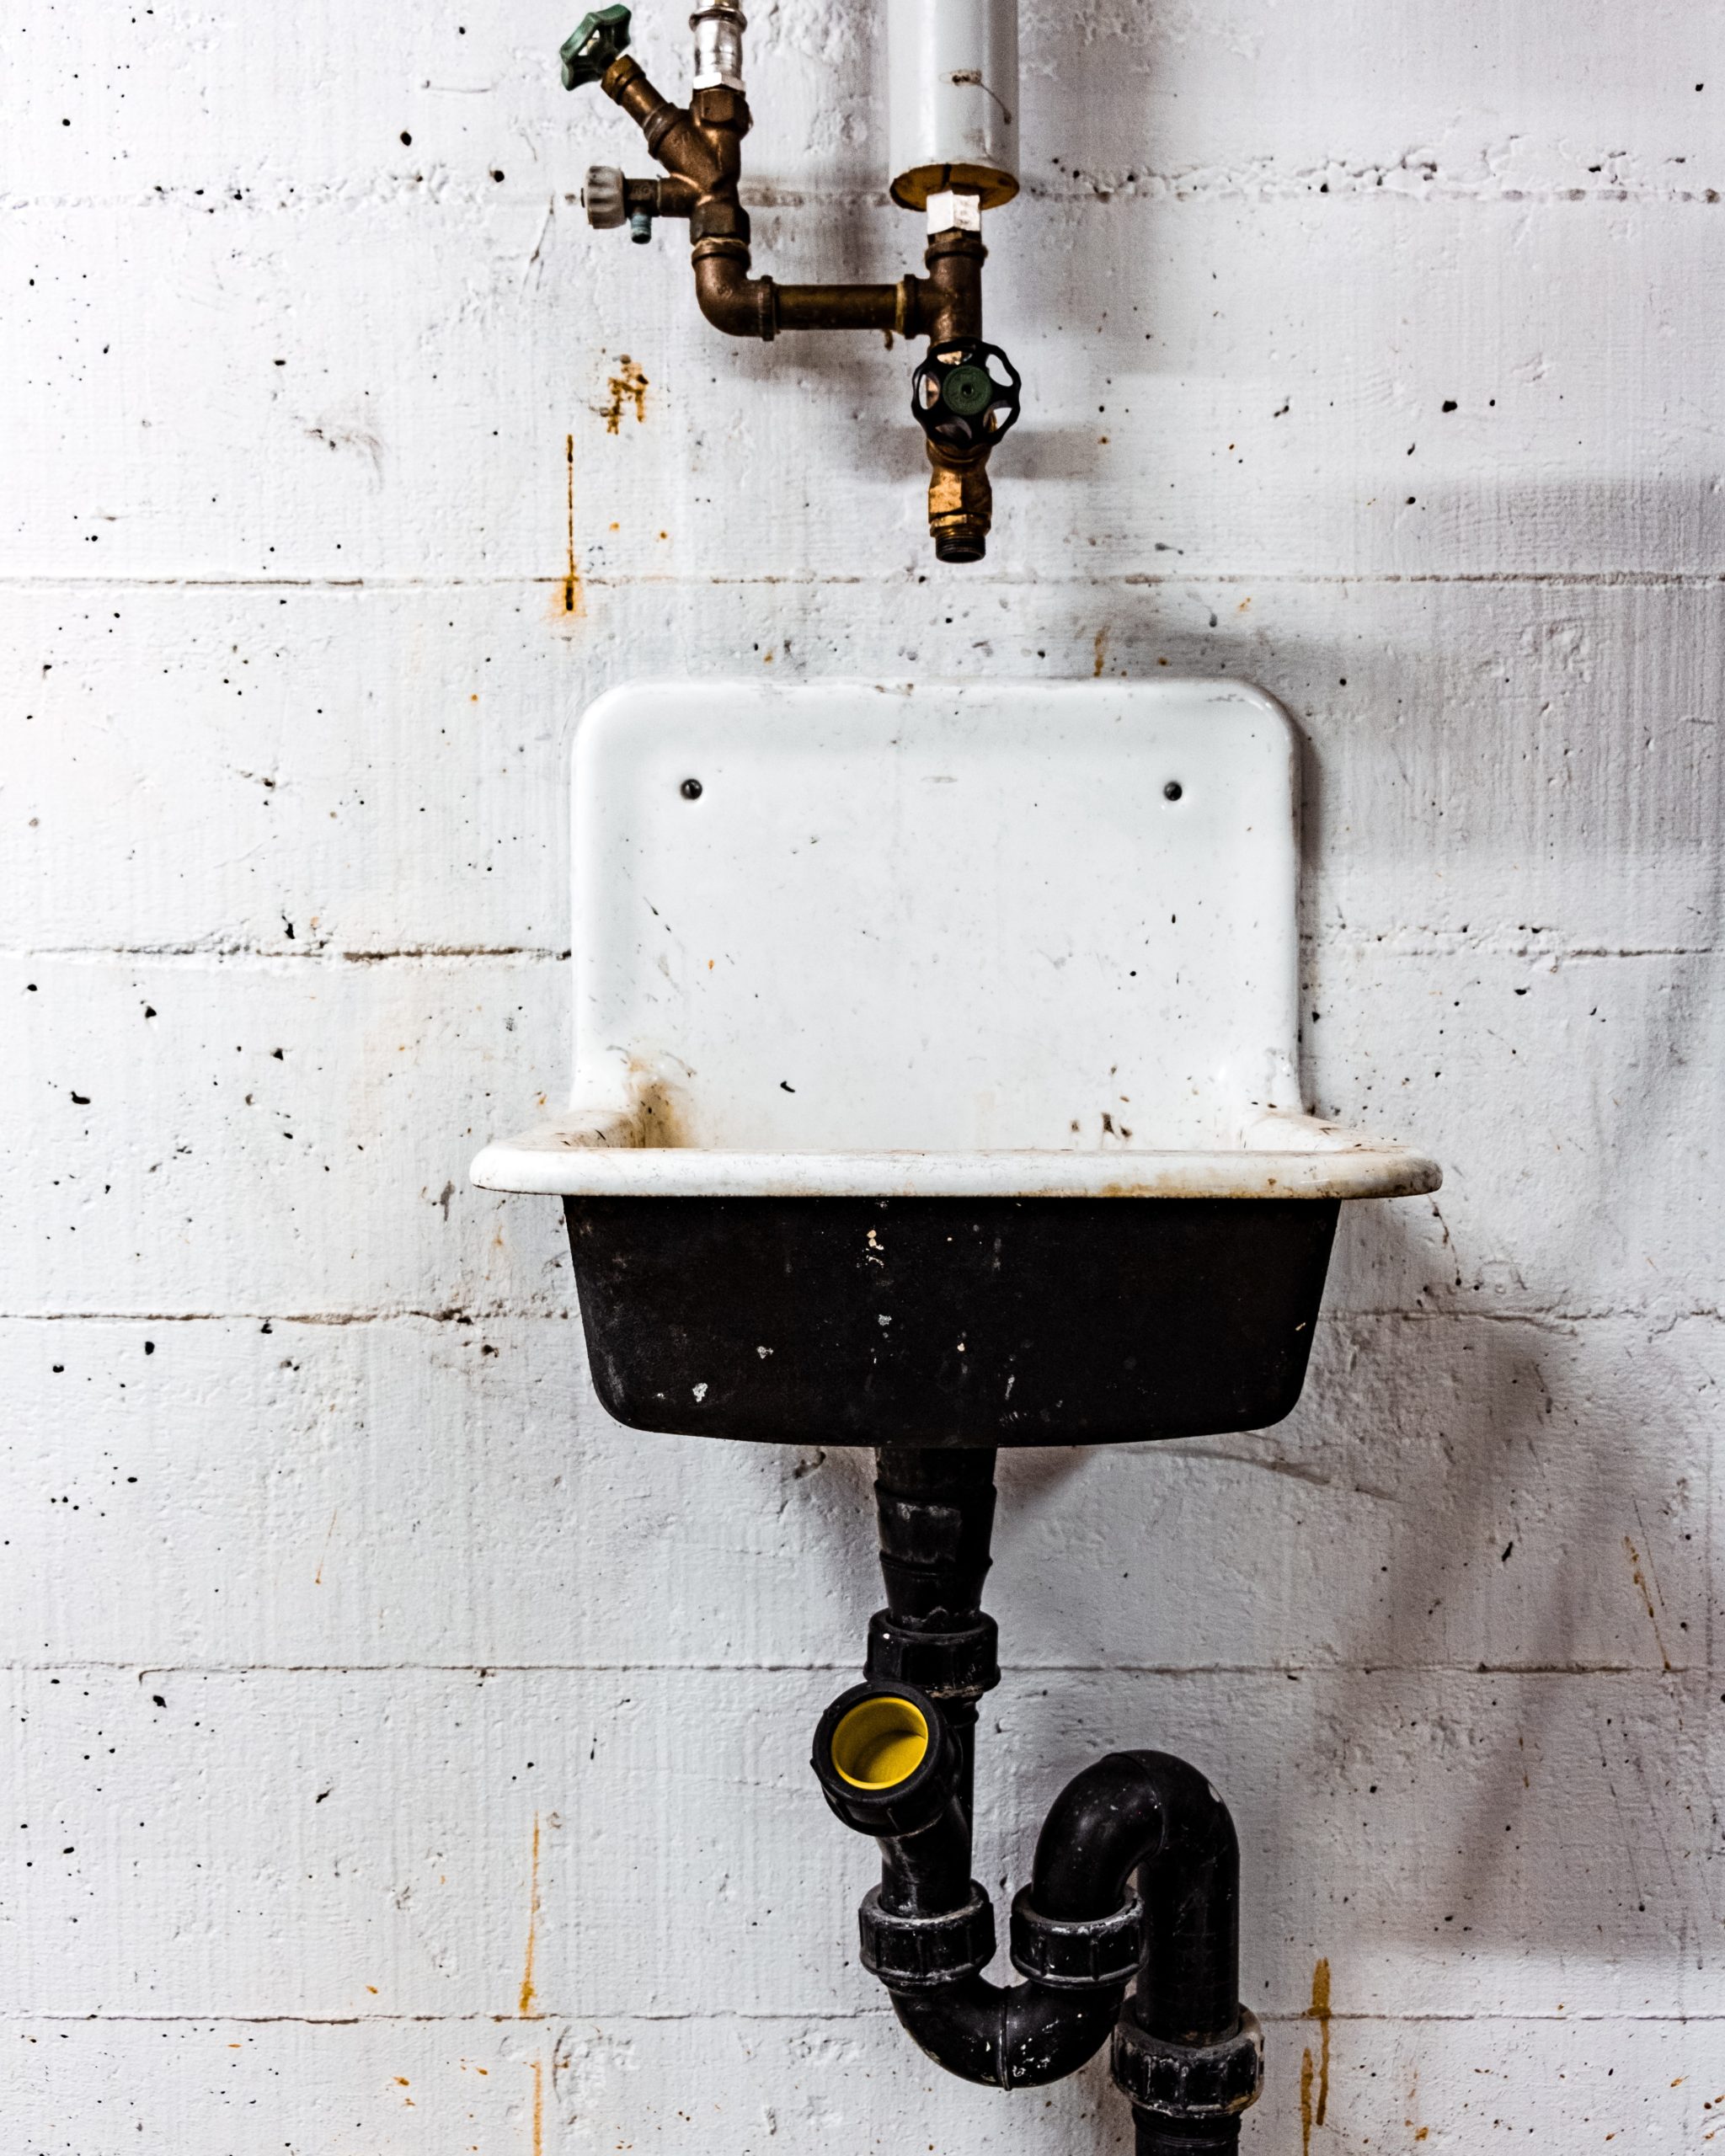 Daniel Fazio's image of a dirty sink from Unsplash